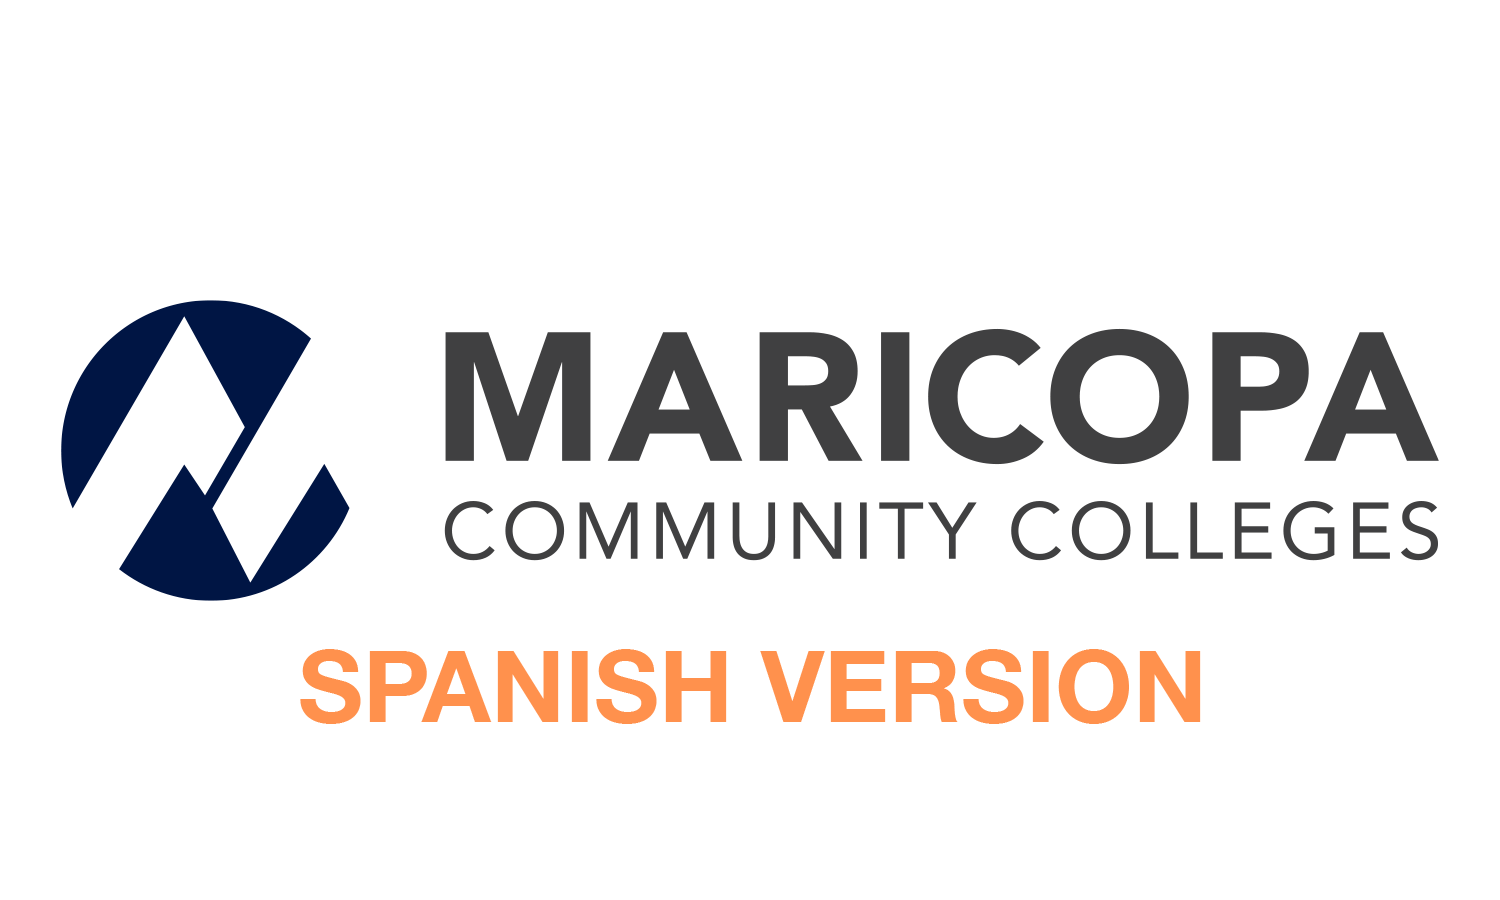 Maricopa Community Colleges (Spanish Version)